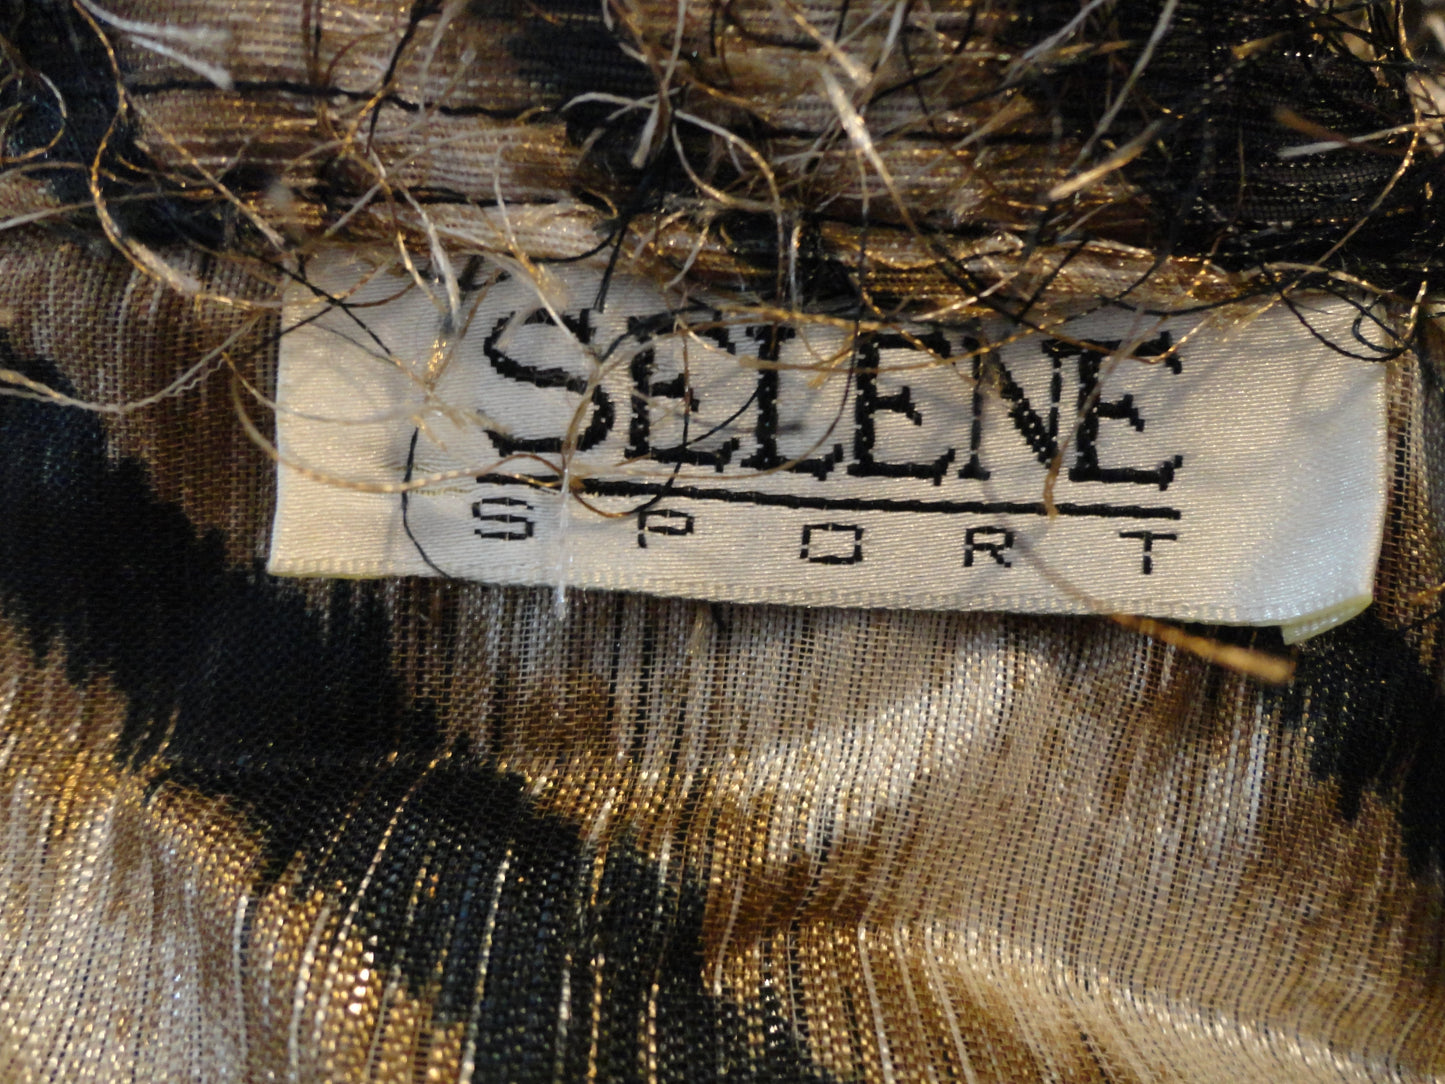 Selene Sport 90's Eyelash Top Animal Print Size M SKU 000185-20